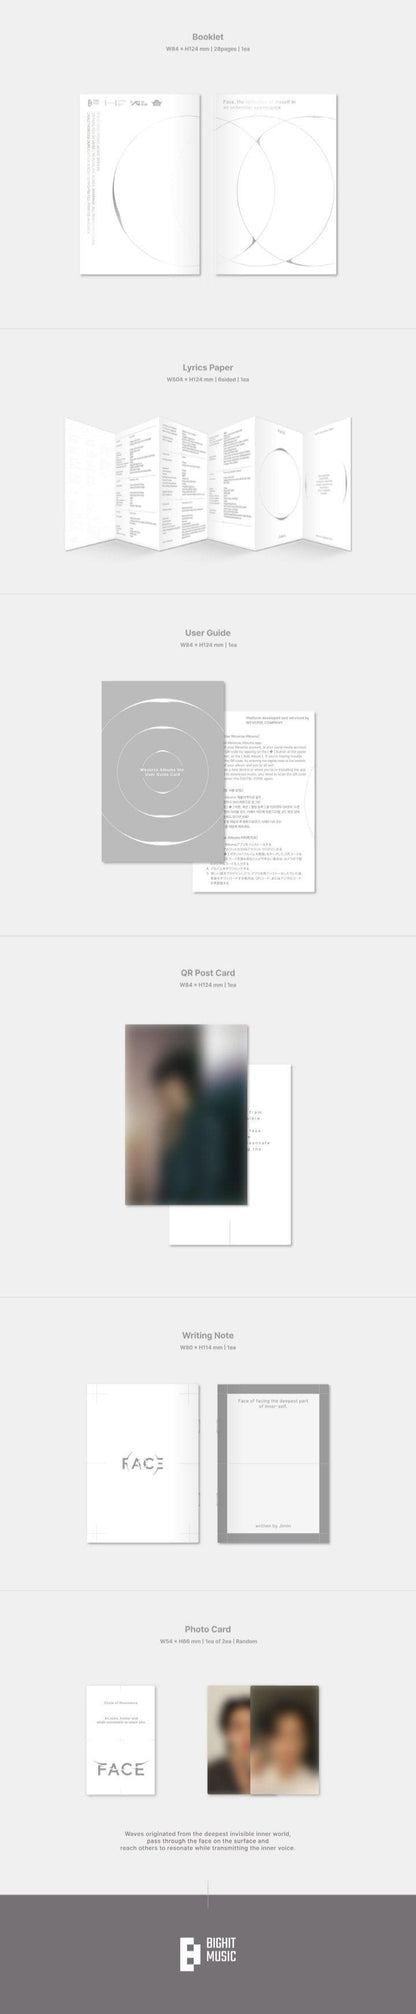 JIMIN (BTS) - Solo Mini Album Vol.1 [FACE] (Weverse Ver.) - KAEPJJANG SHOP (캡짱 숍)